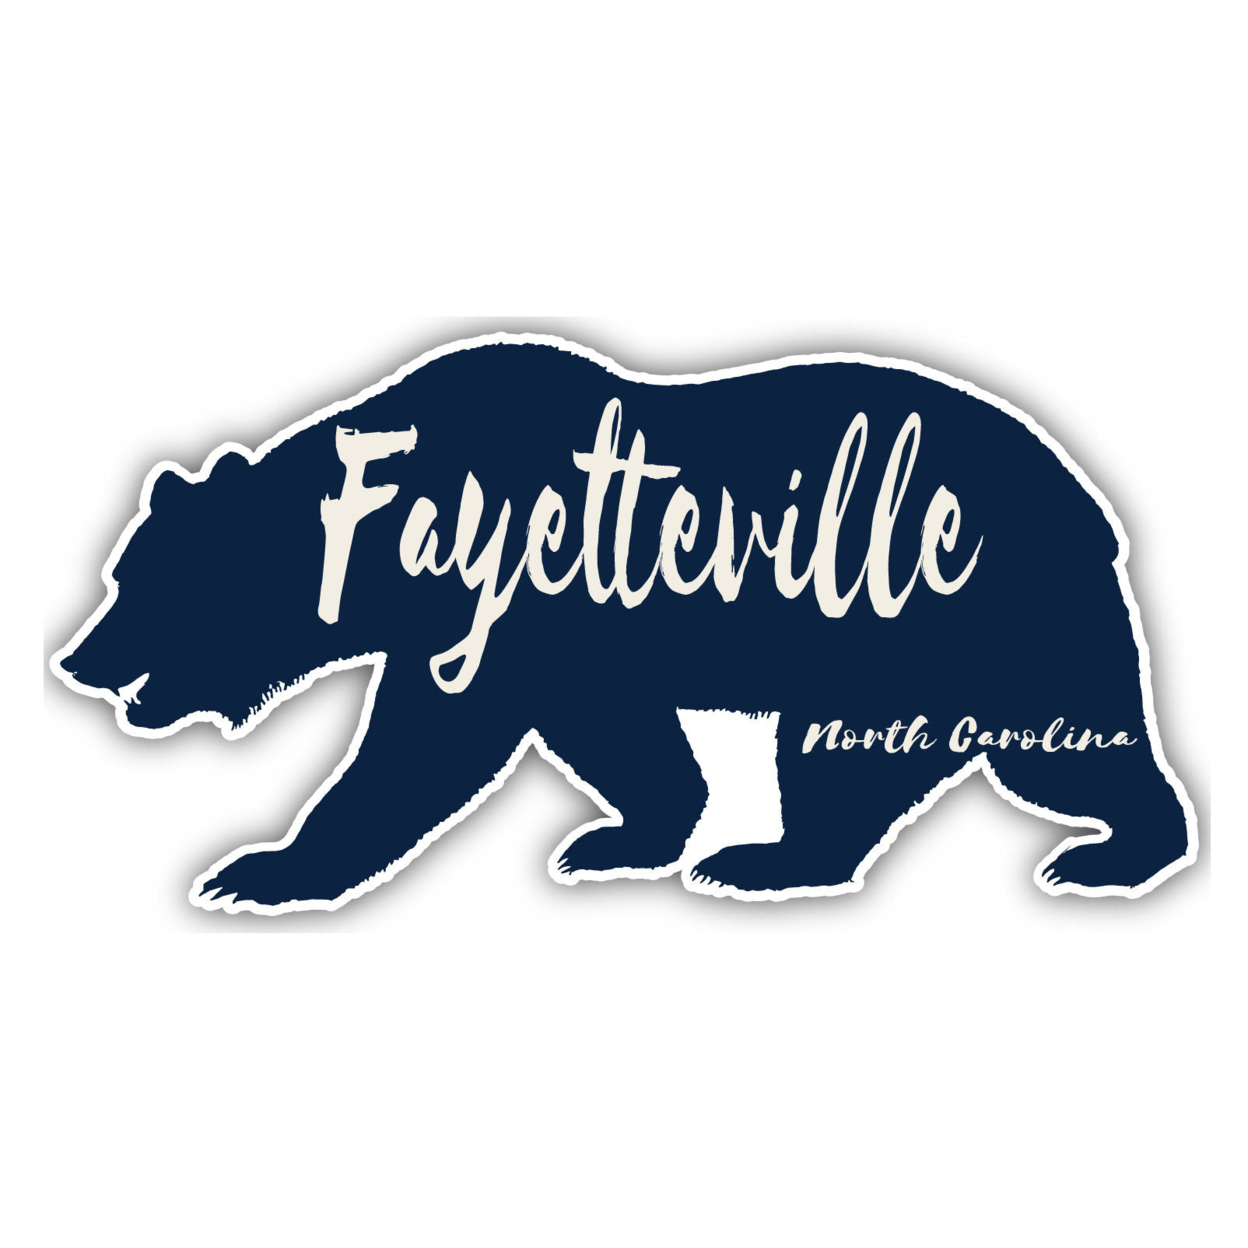 Fayetteville North Carolina Souvenir Decorative Stickers (Choose Theme And Size) - Single Unit, 8-Inch, Camp Life